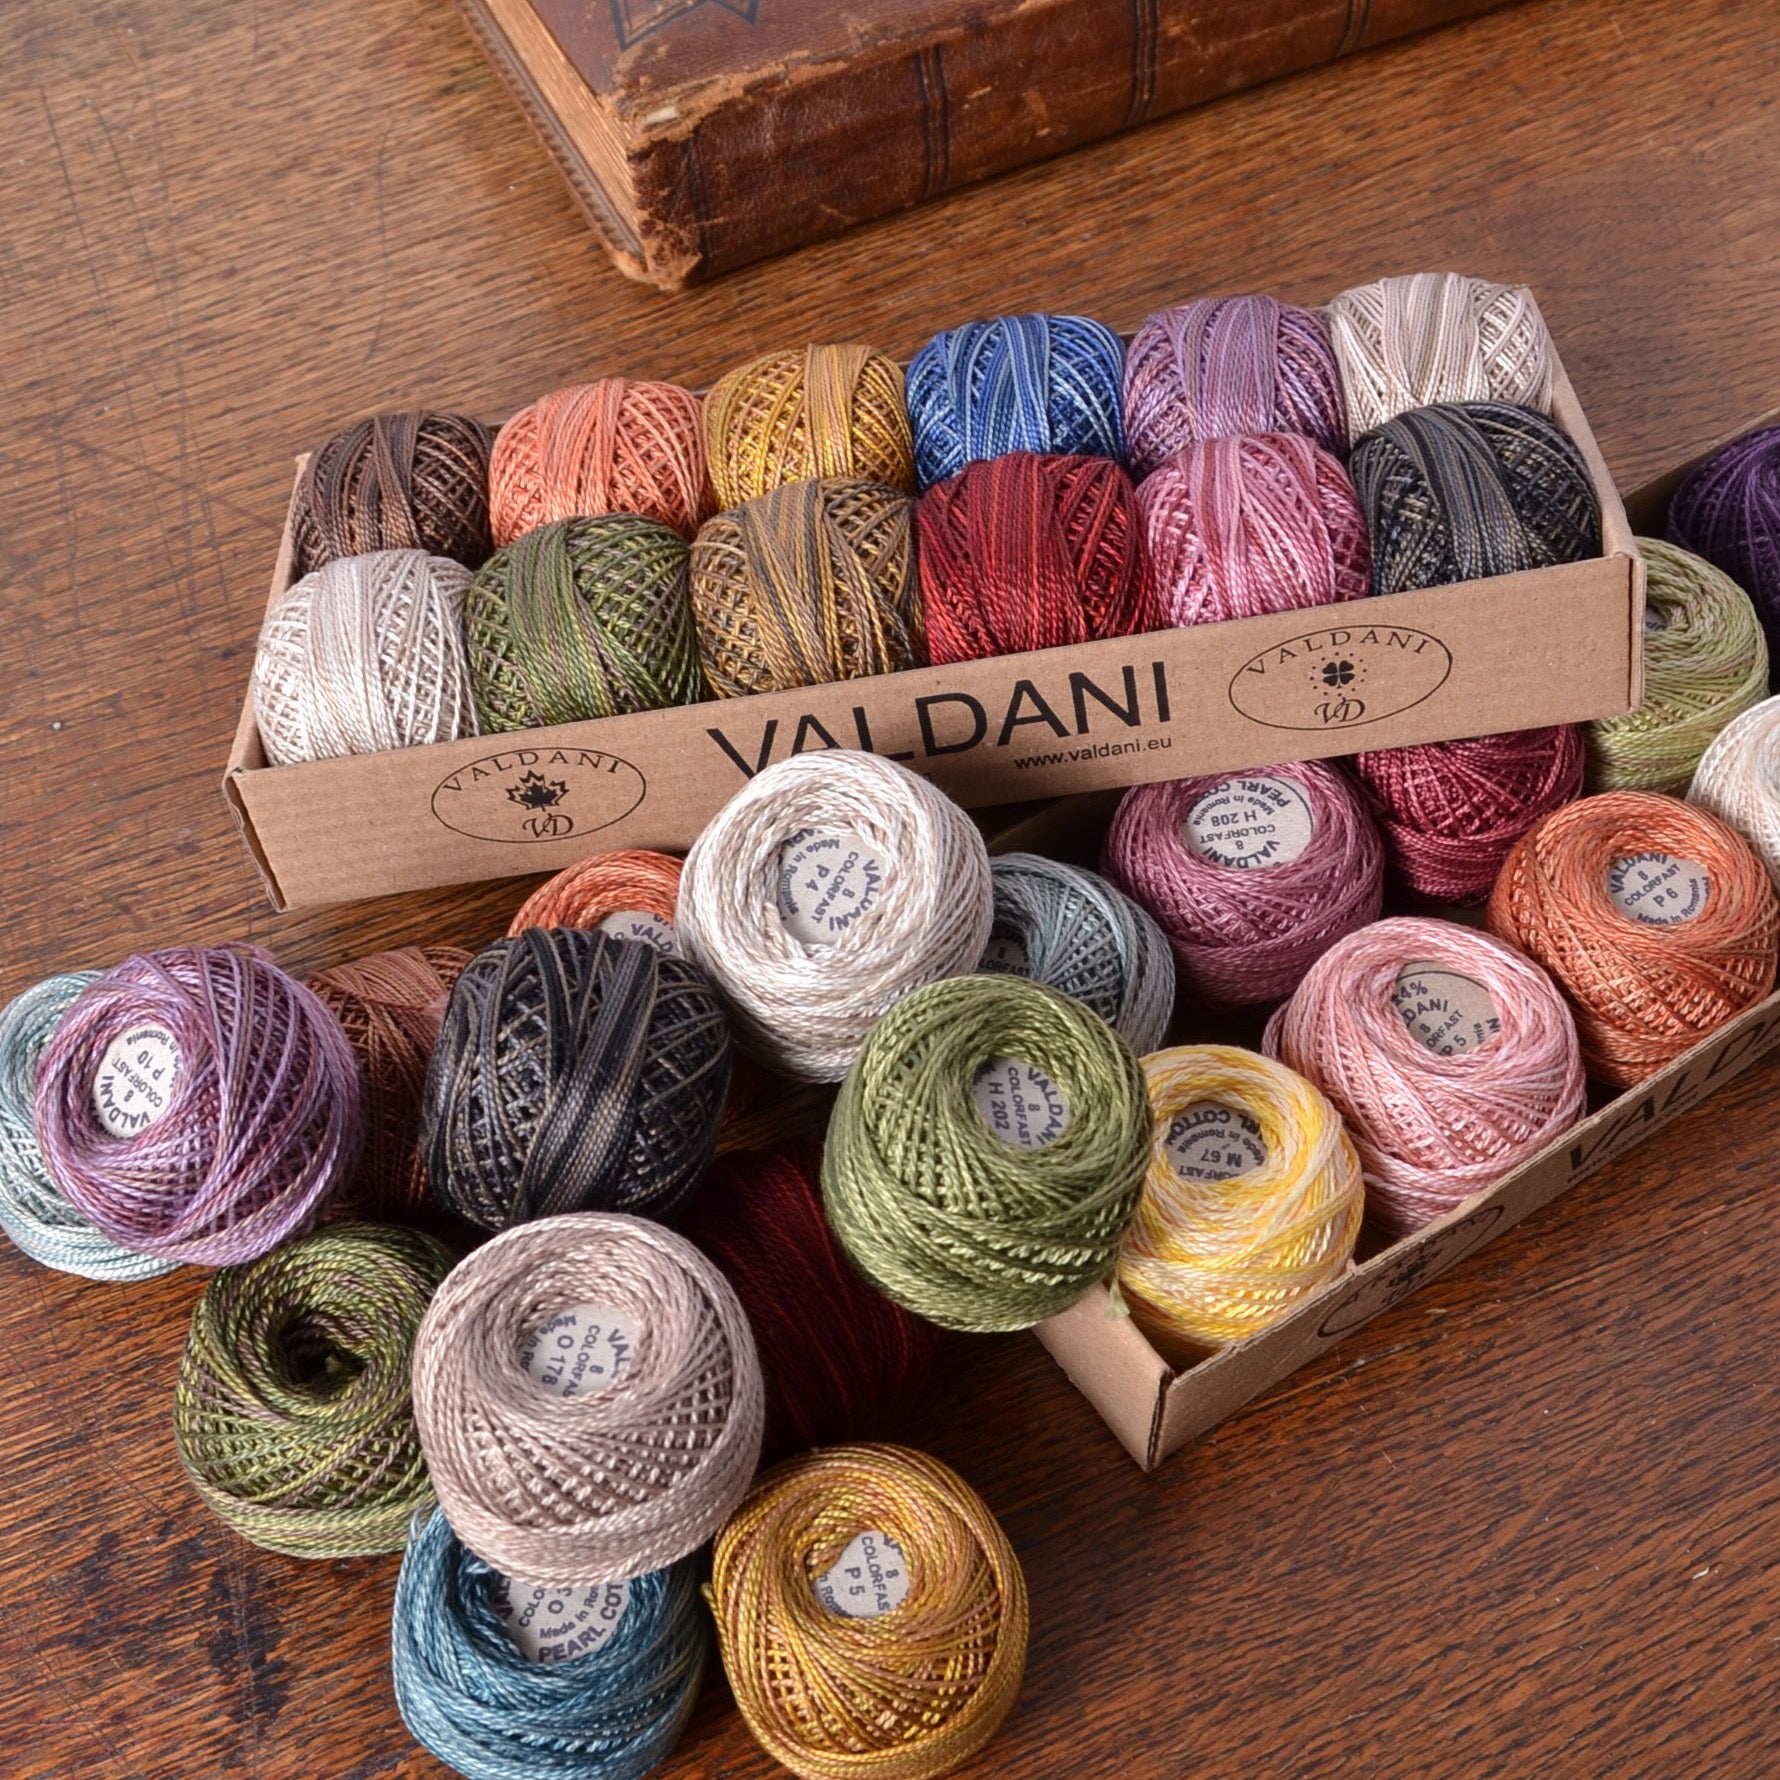 Valdani perle cotton threads for hand stitching